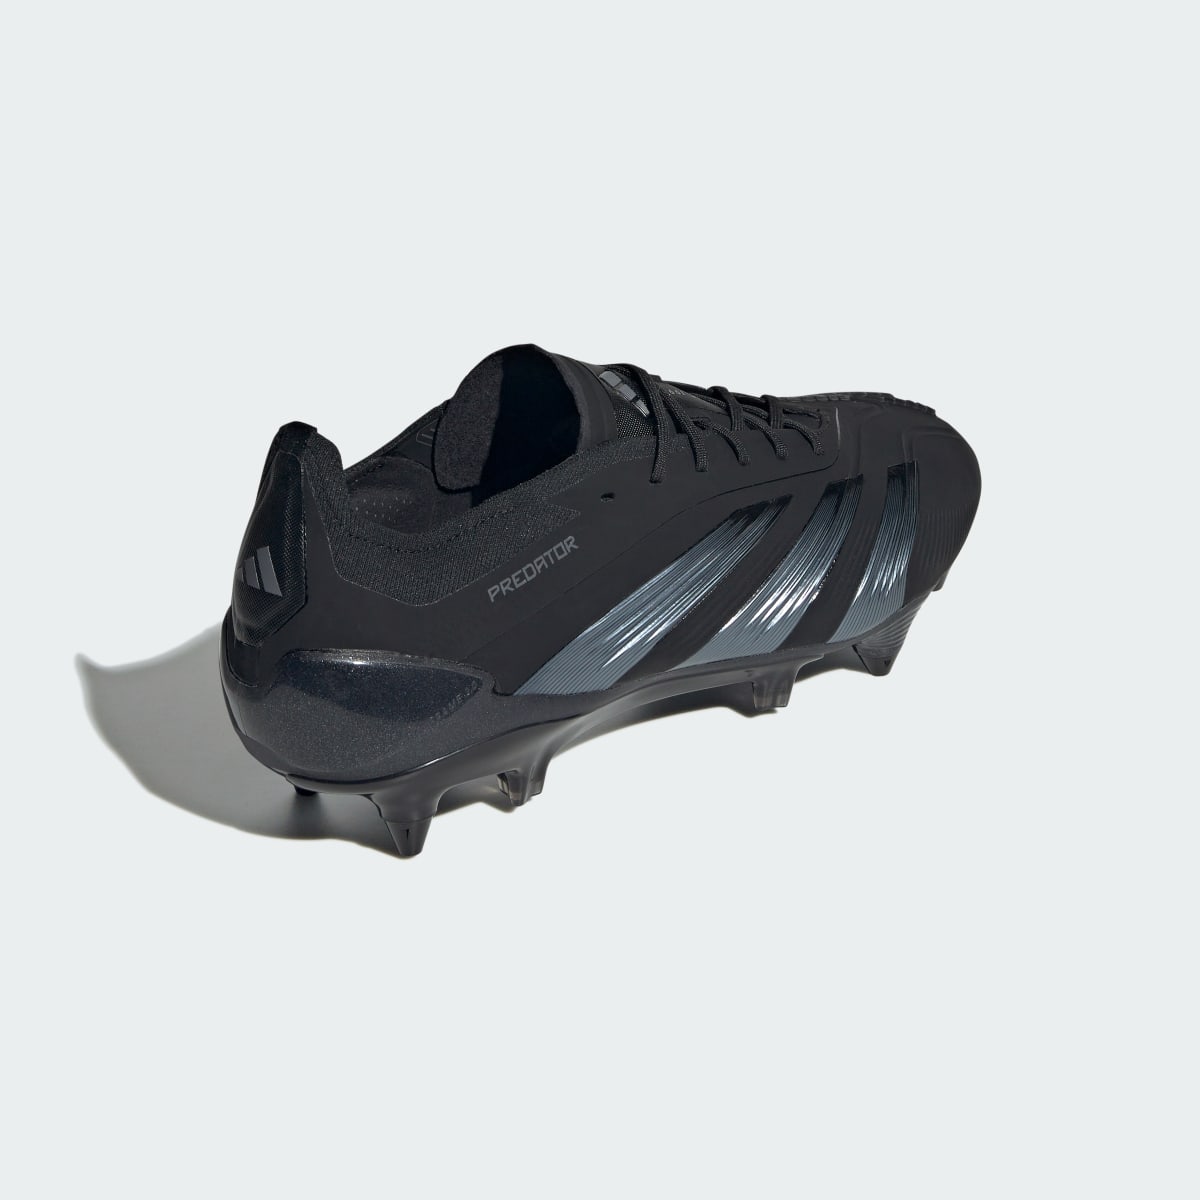 Adidas Chaussure de football Predator Elite Terrain gras. 7